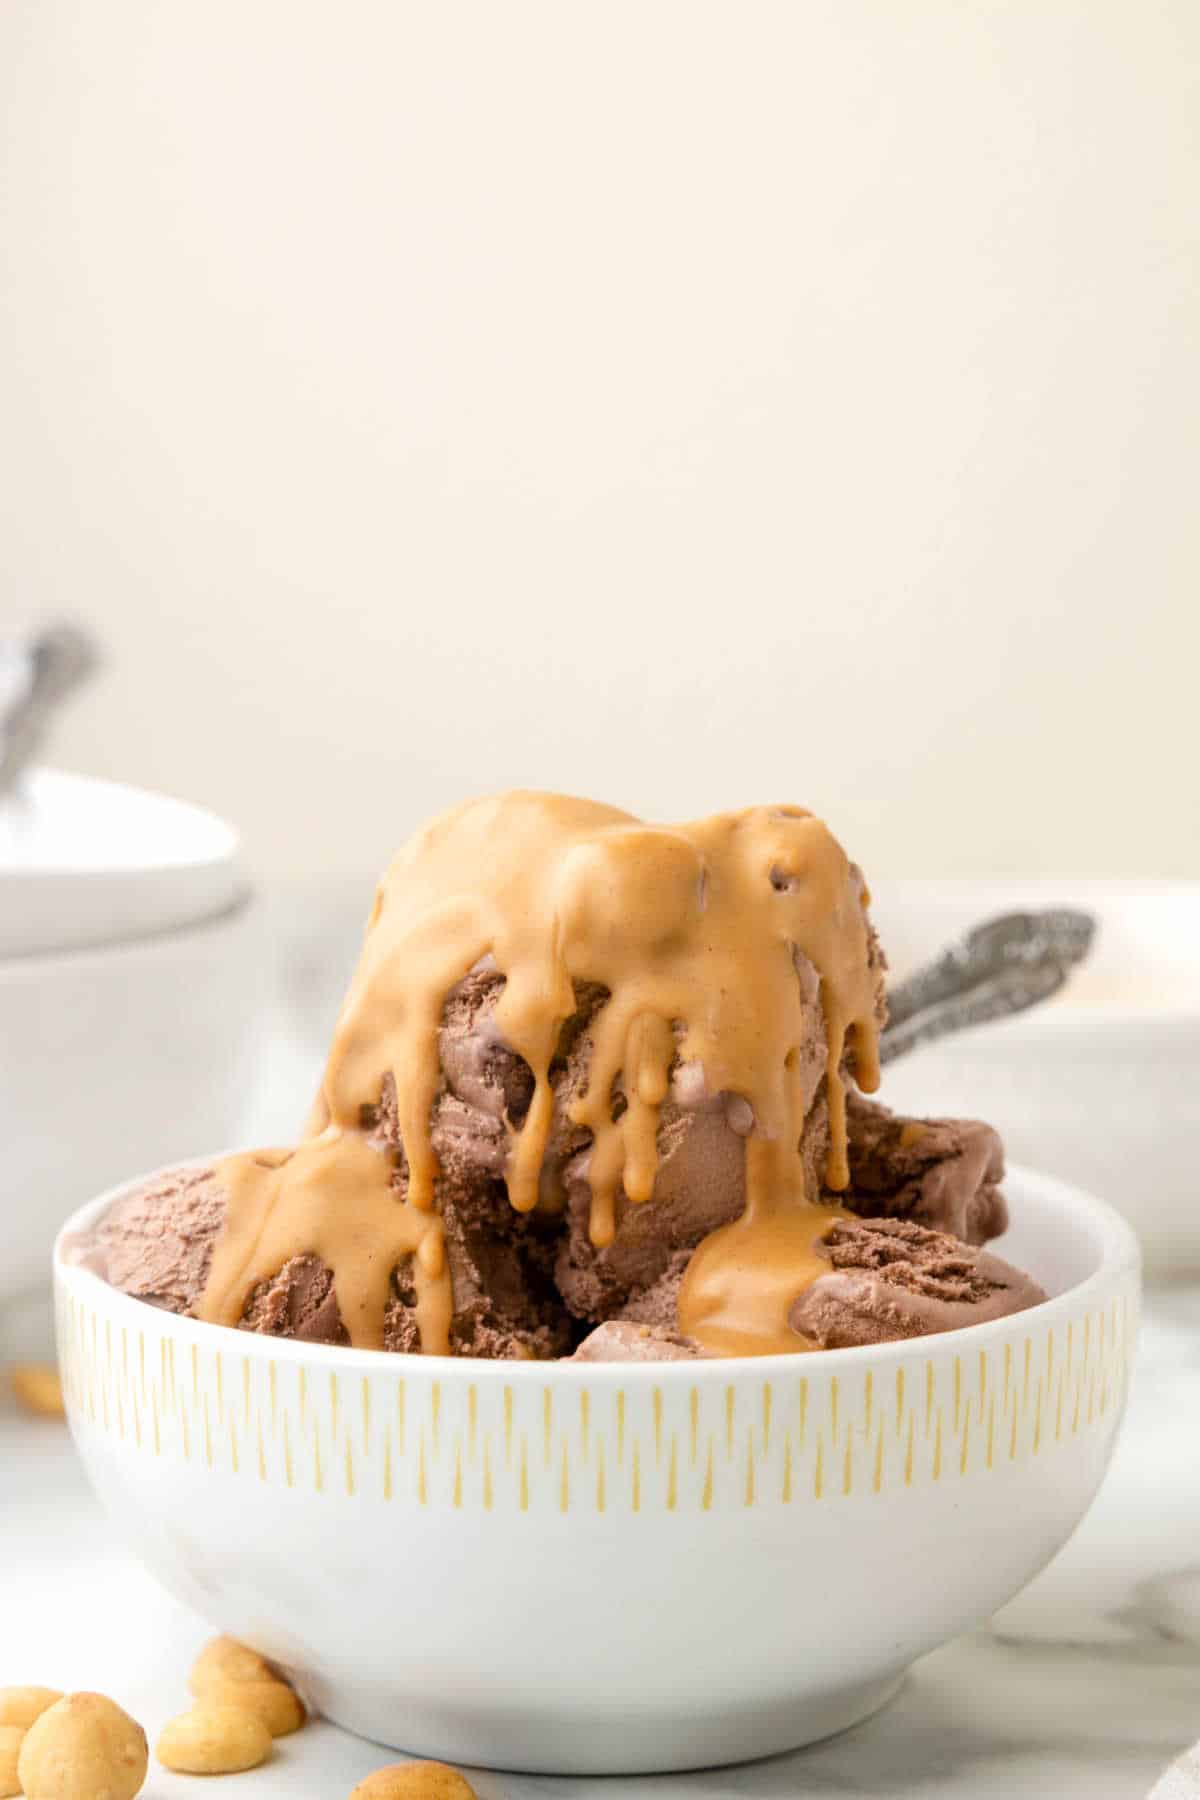 Peanut butter magic shell on chocolate ice cream.